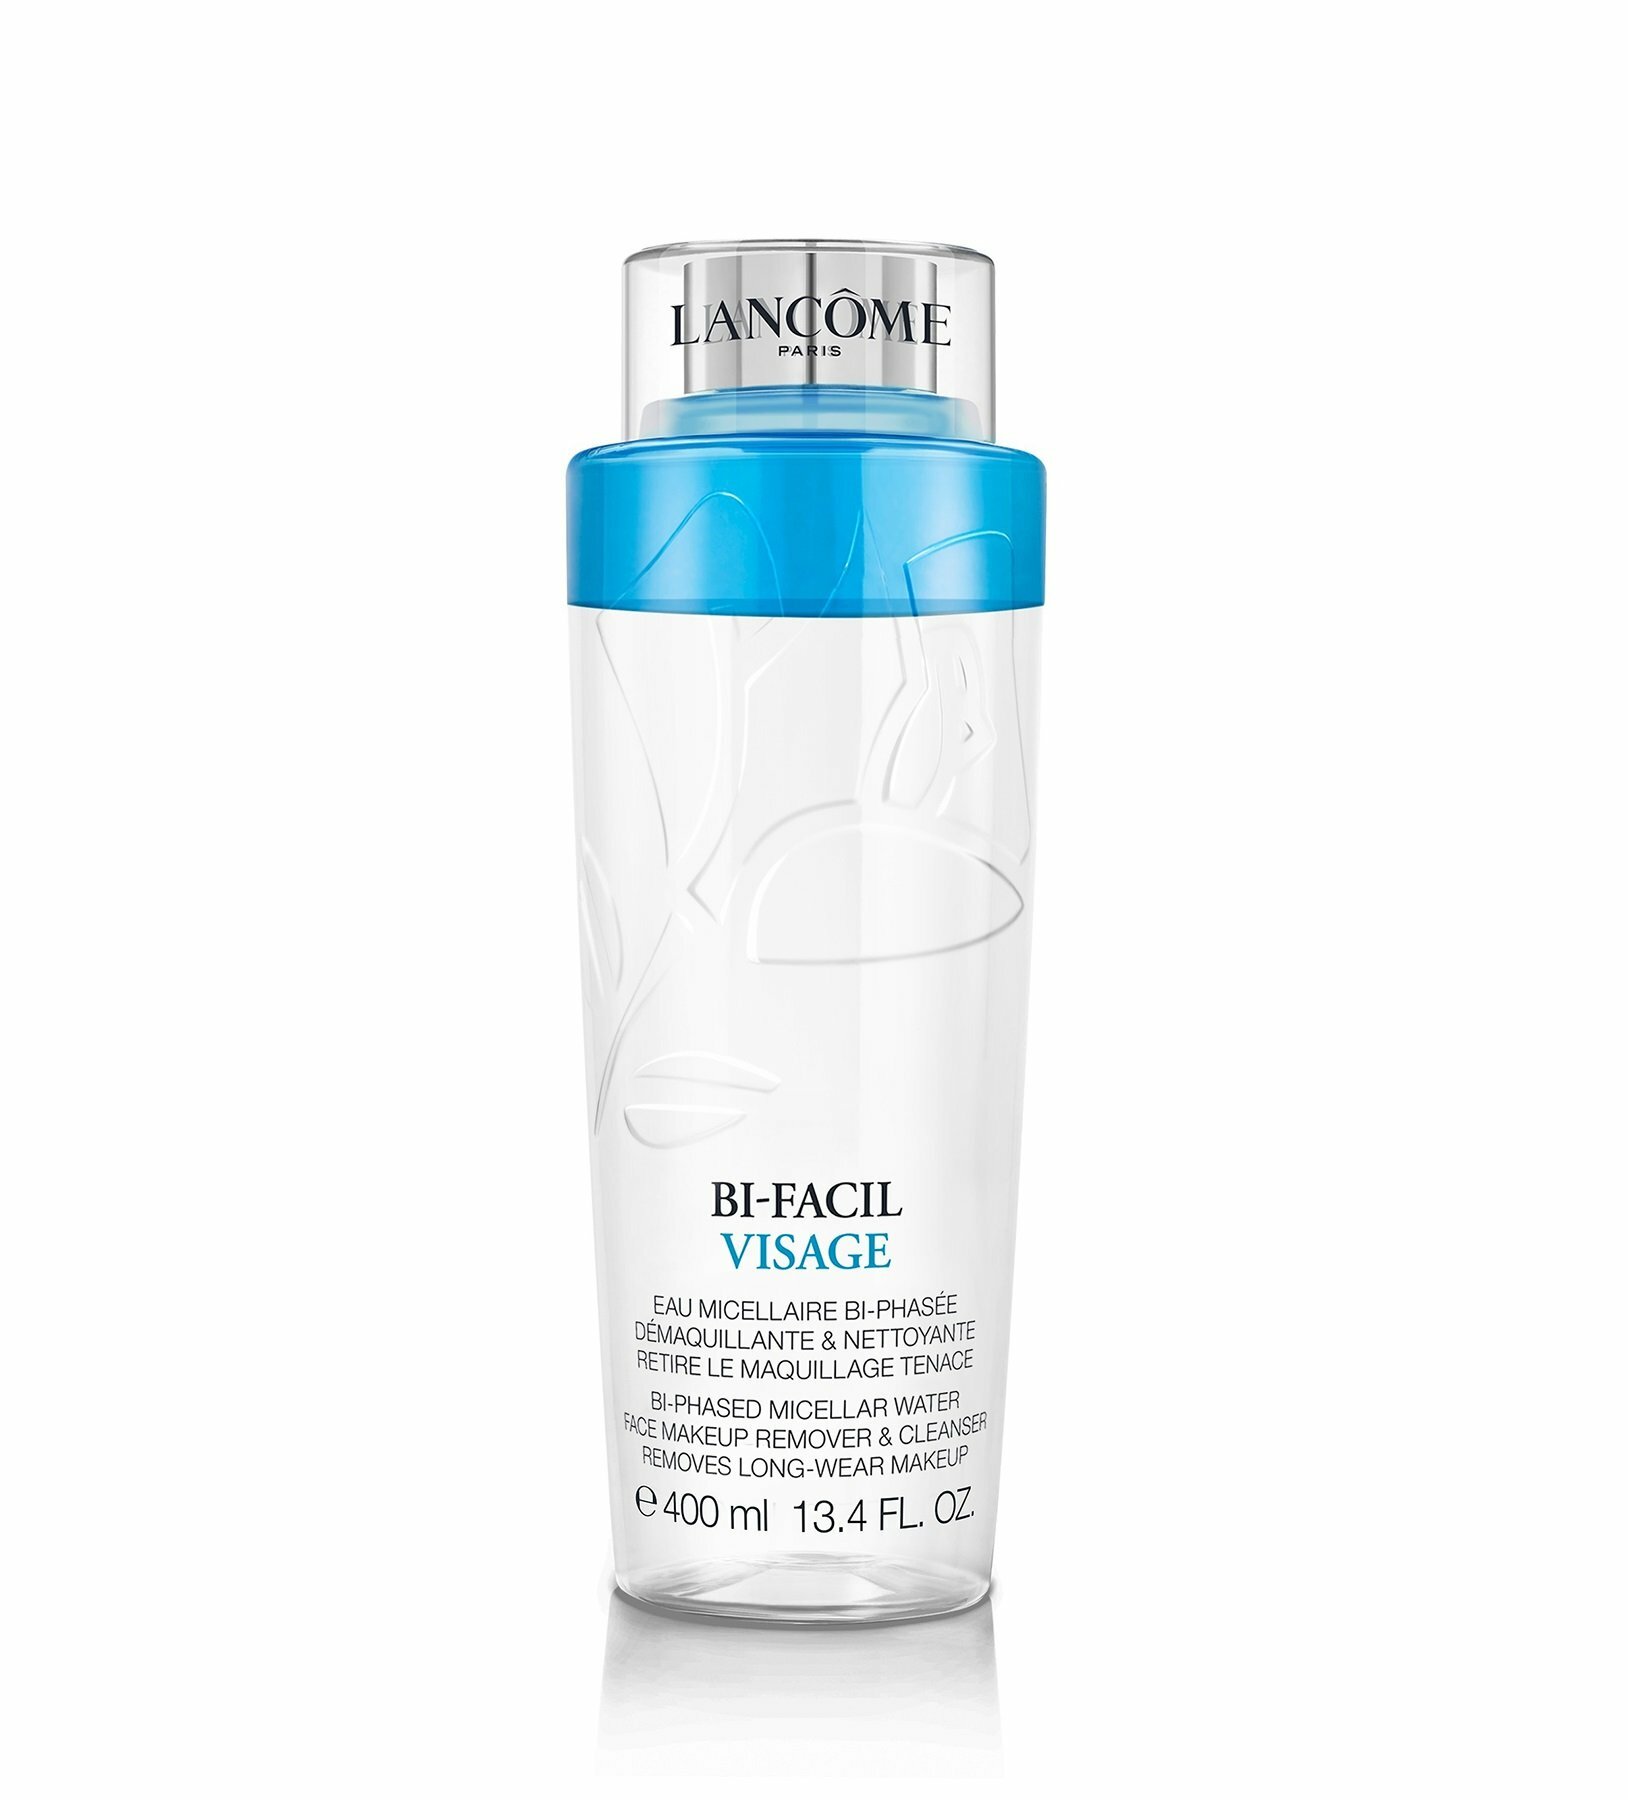 Lancome Двухфазная мицеллярная вода для снятия макияжа Bi-Facil Visage, 200 мл